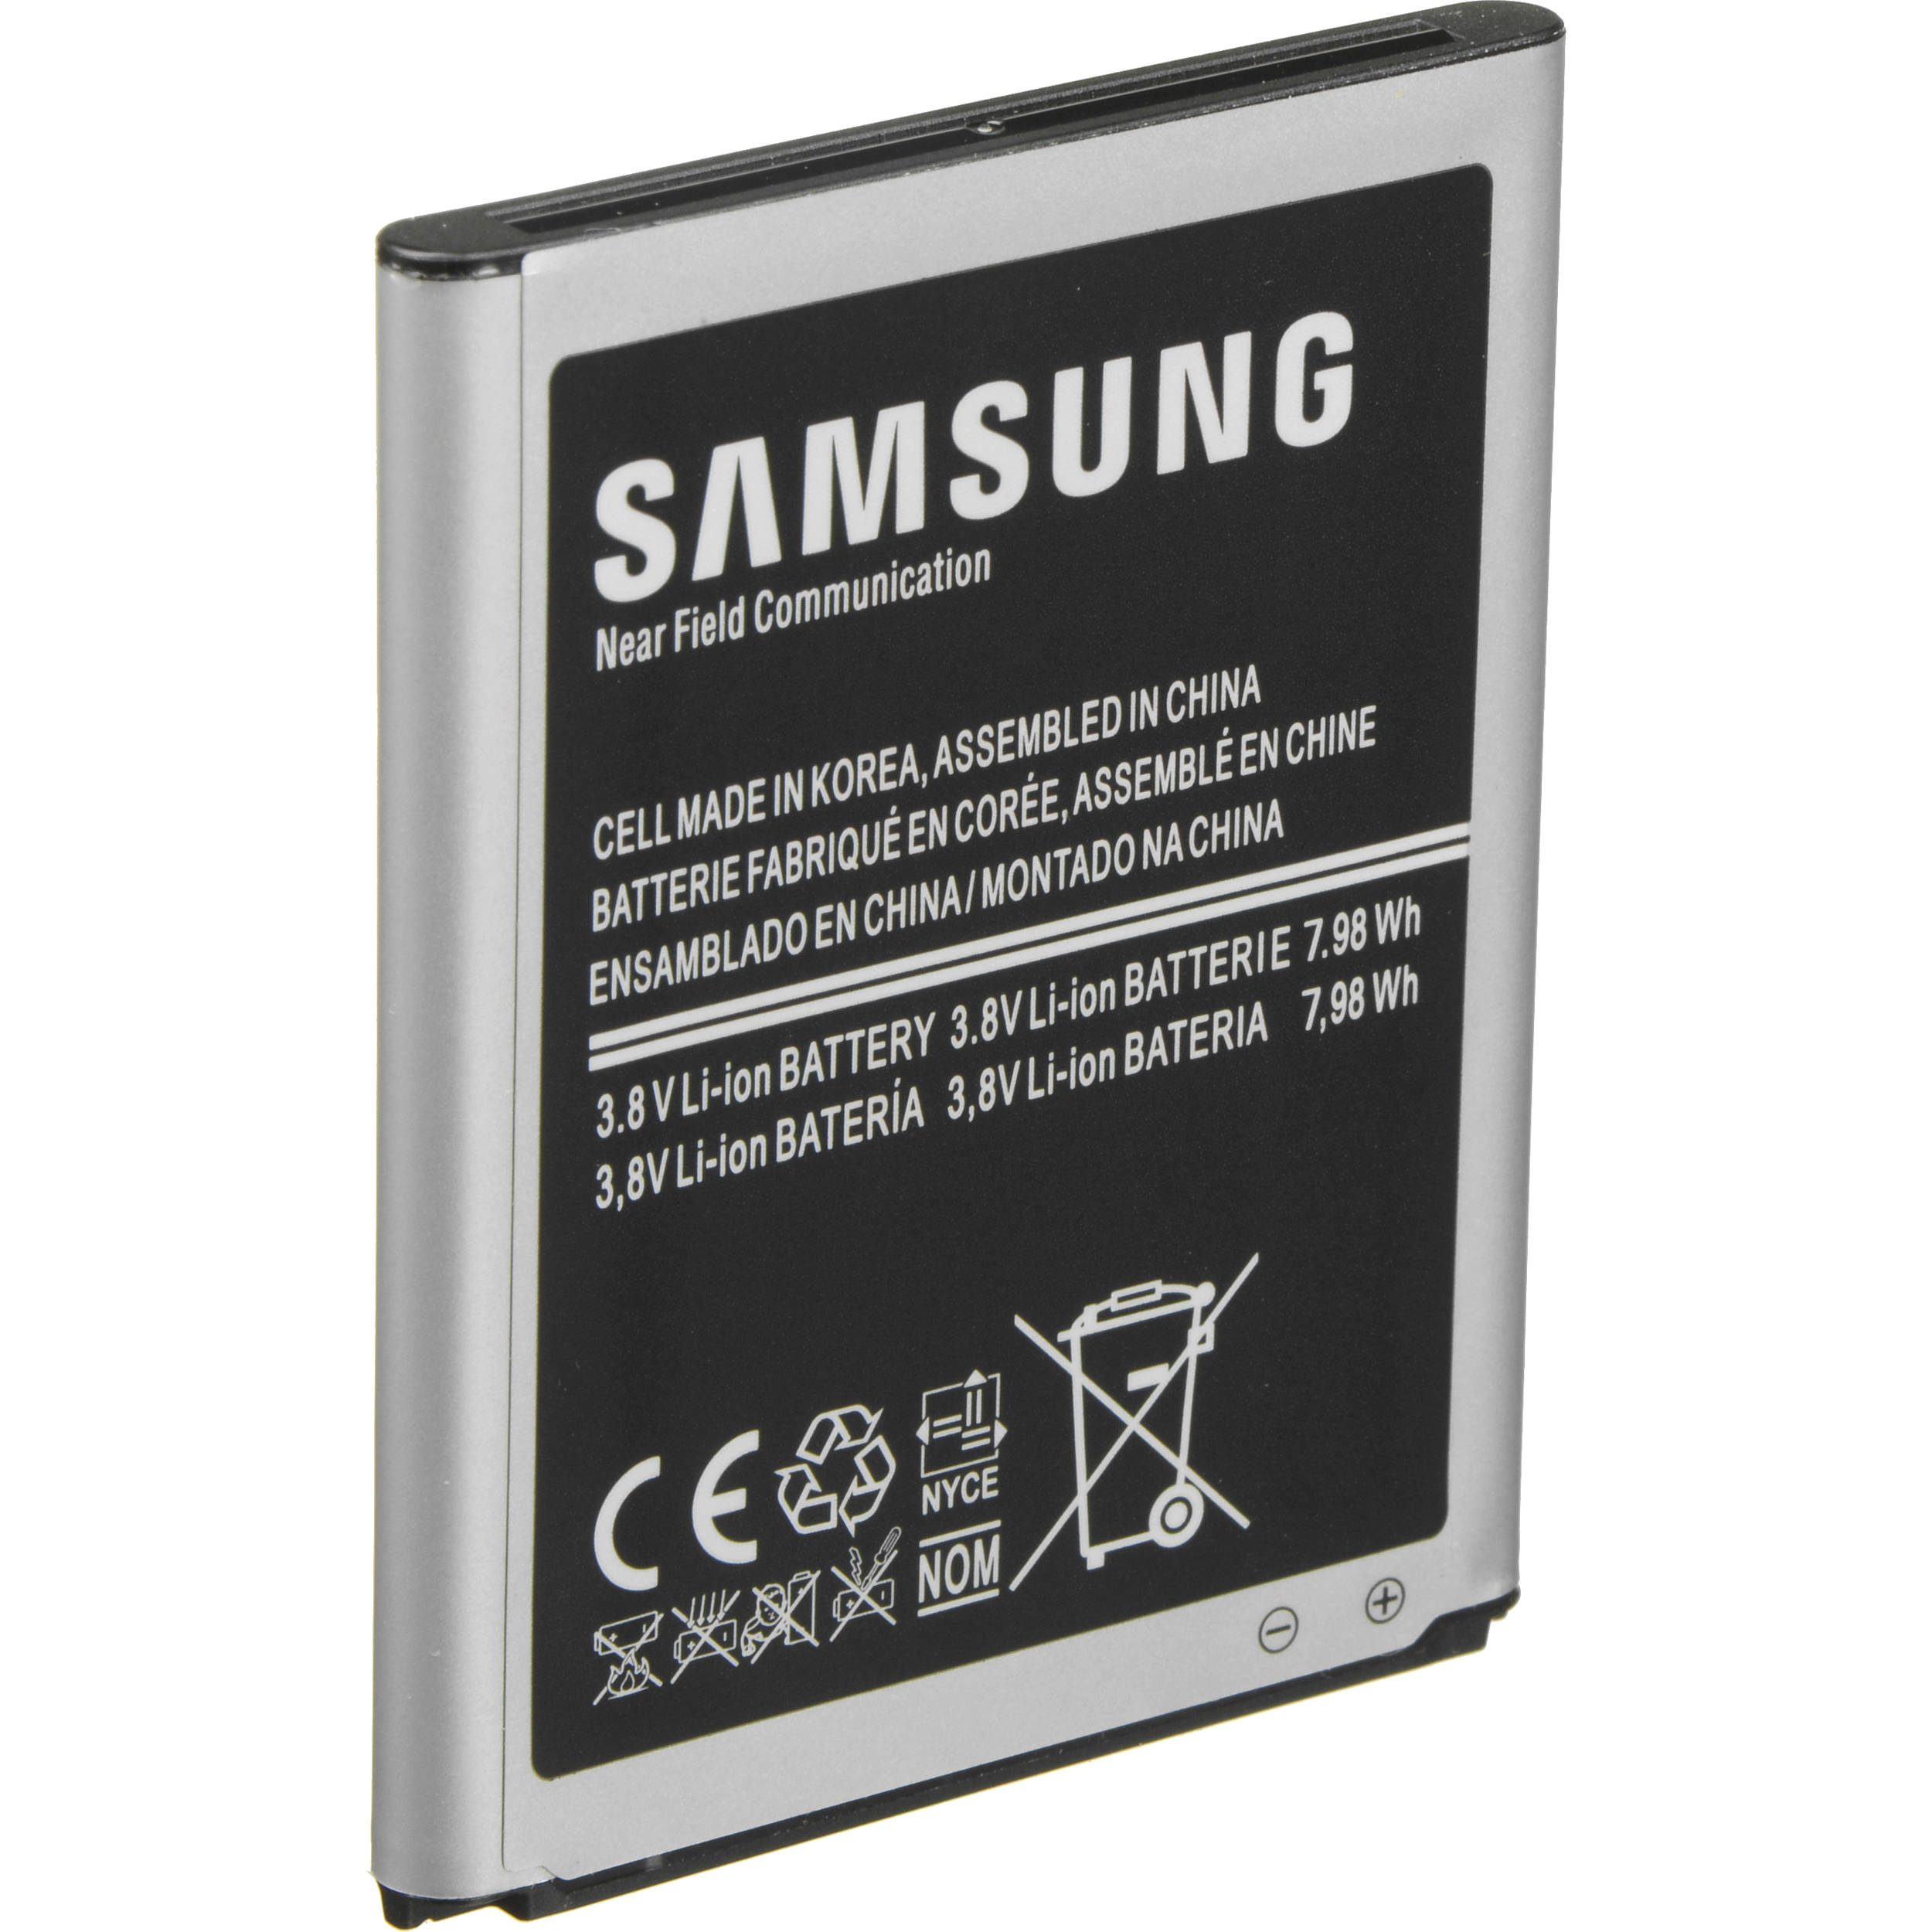 Сотовый телефон аккумулятор купить. Samsung Galaxy s III аккумулятор. Аккумулятор для Samsung Note 3. Аккумуляторы для смартфонов самсунг галакси с2. Батарейка телефона.